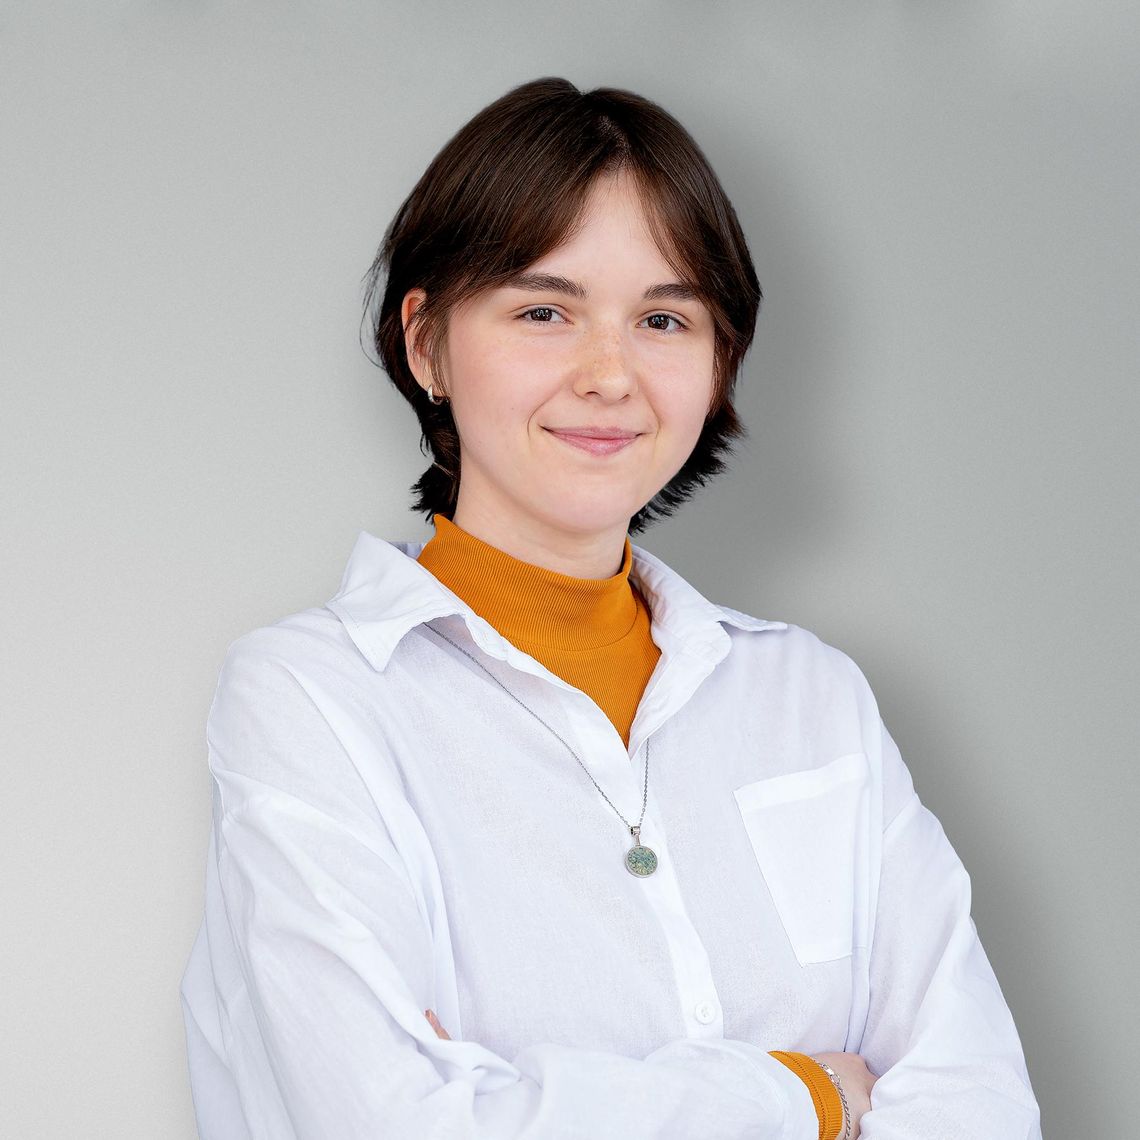 SMM specialist Maria Andreeva